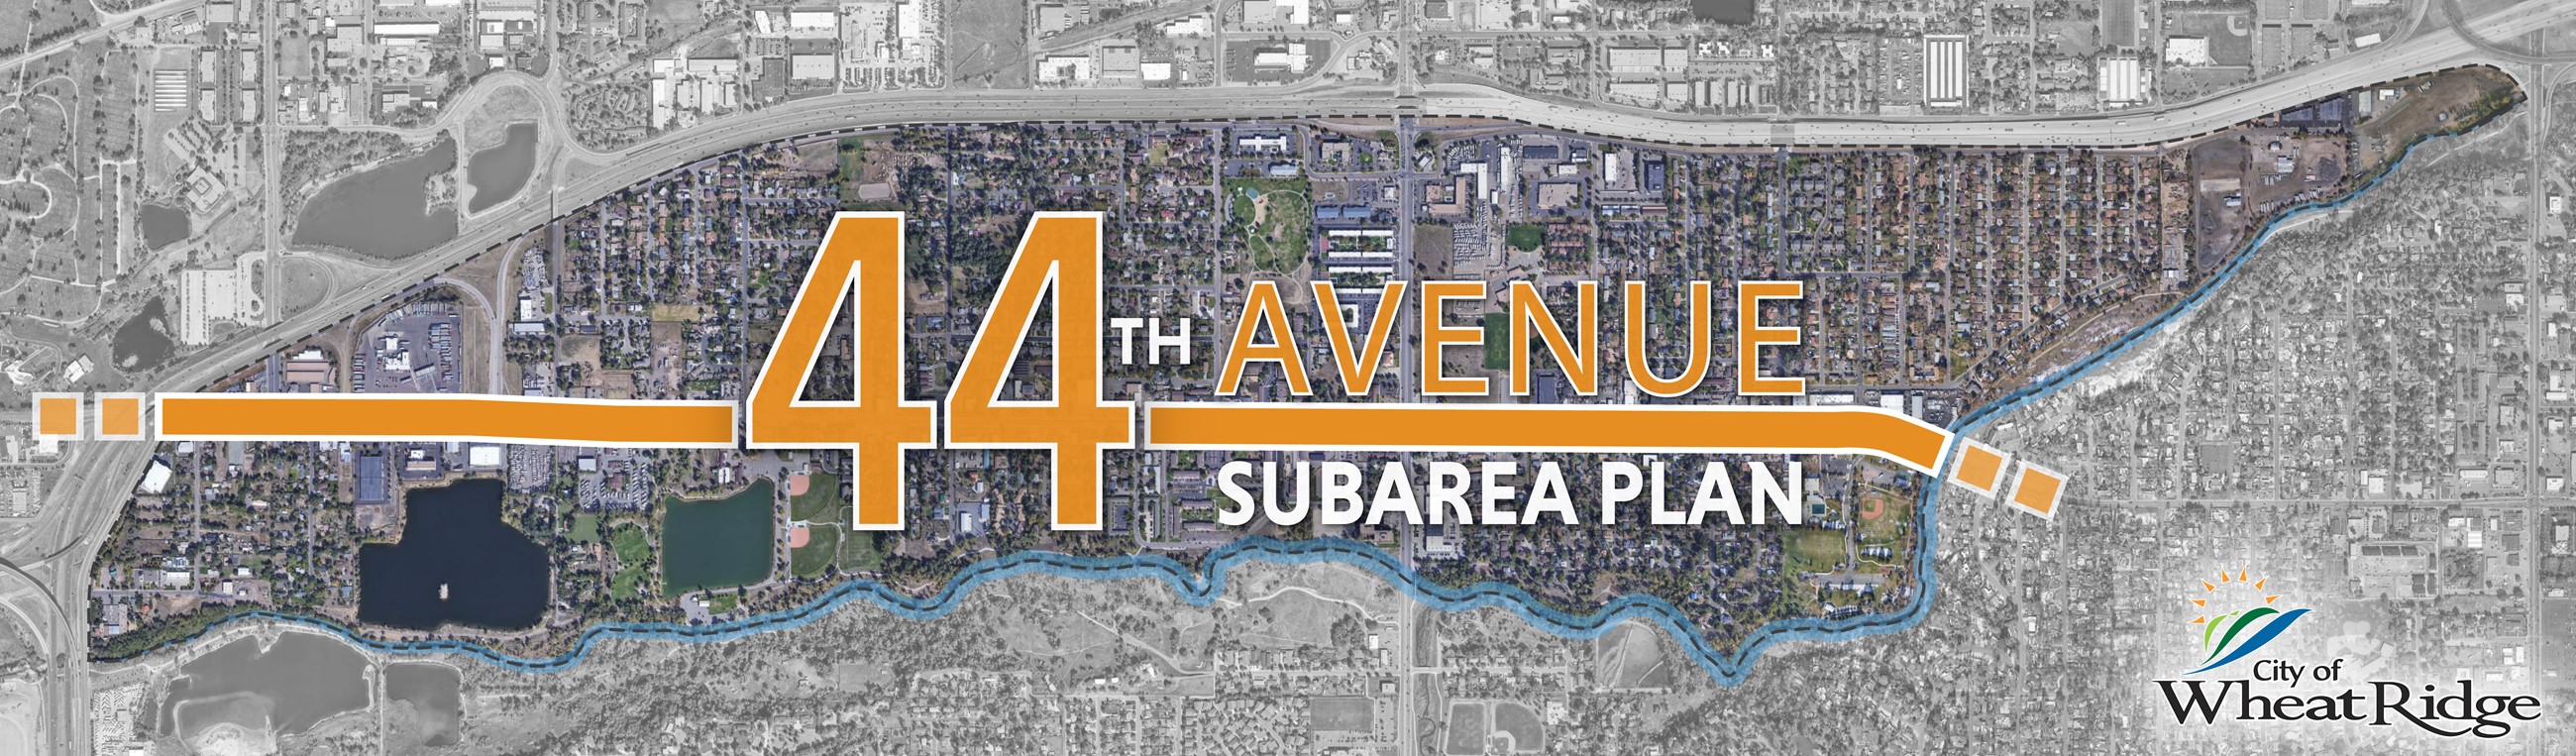 44th Avenue Subarea Plan Project Banner